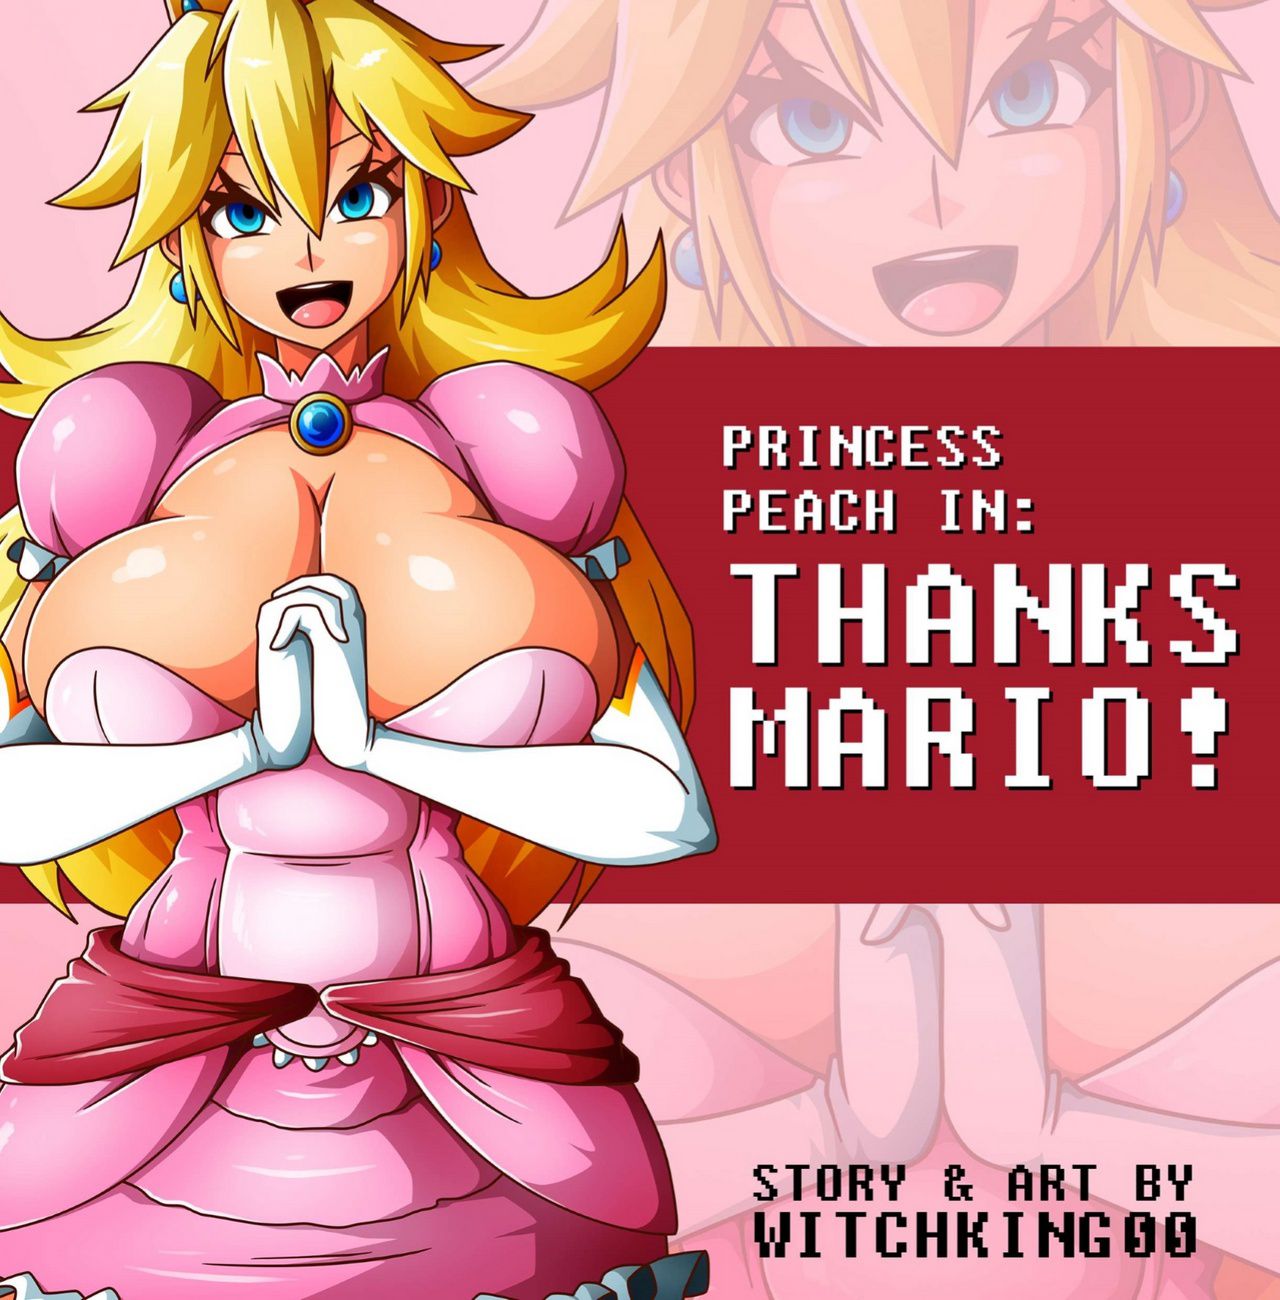 Princess peach porn comic image